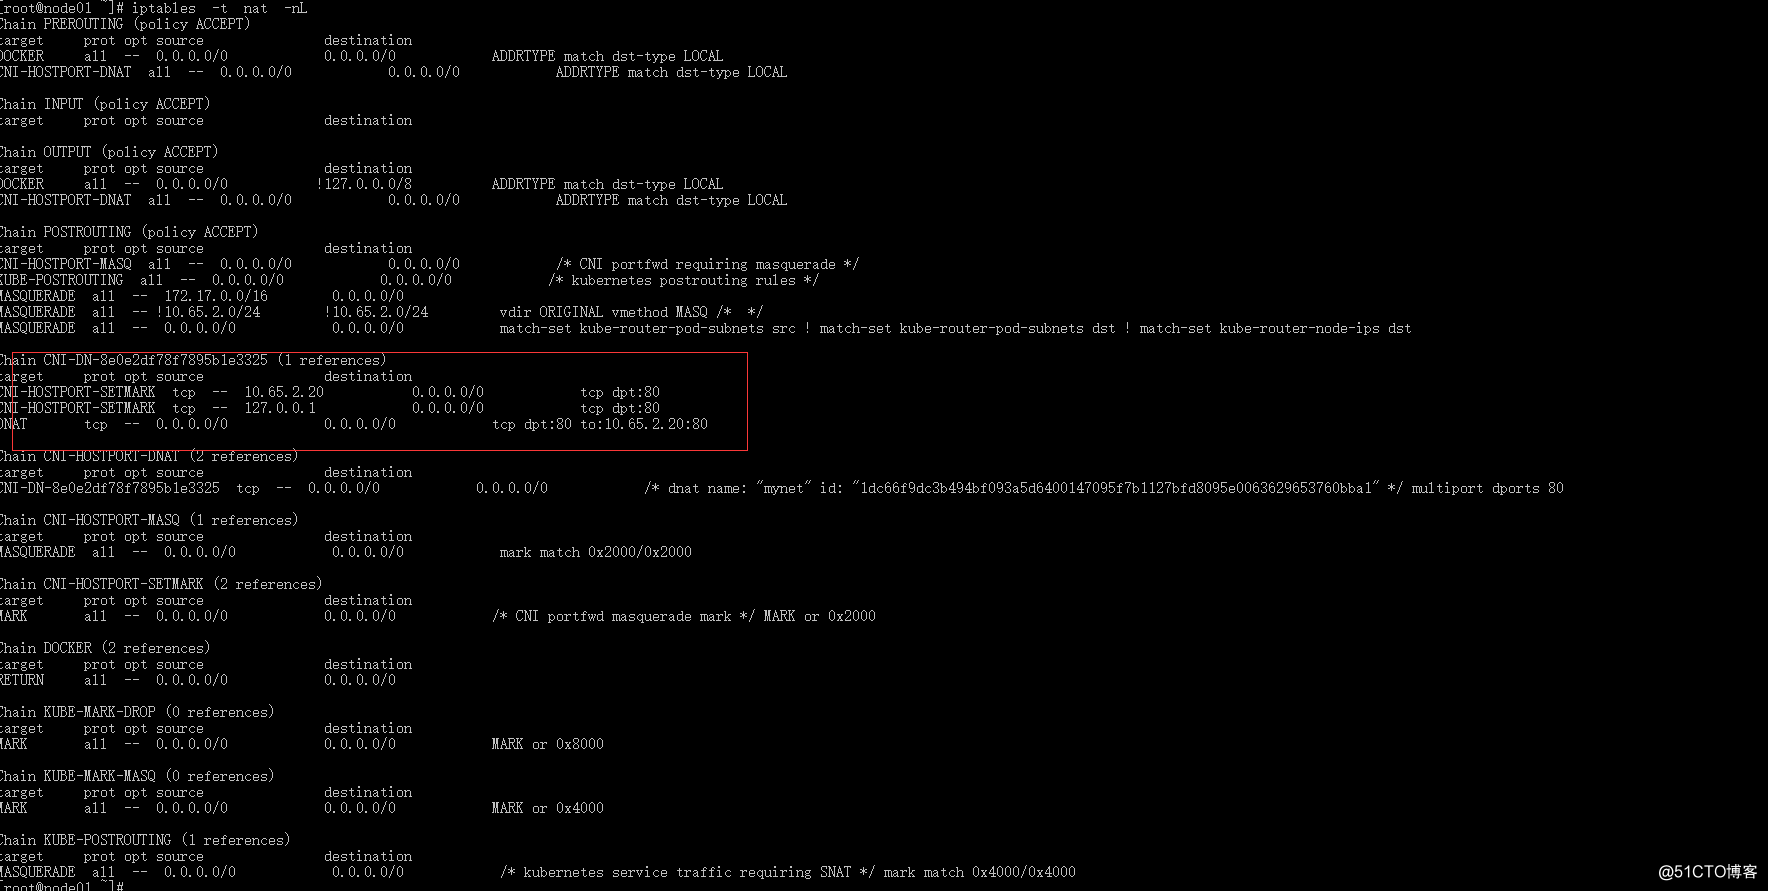 kube-router deployment support hostport